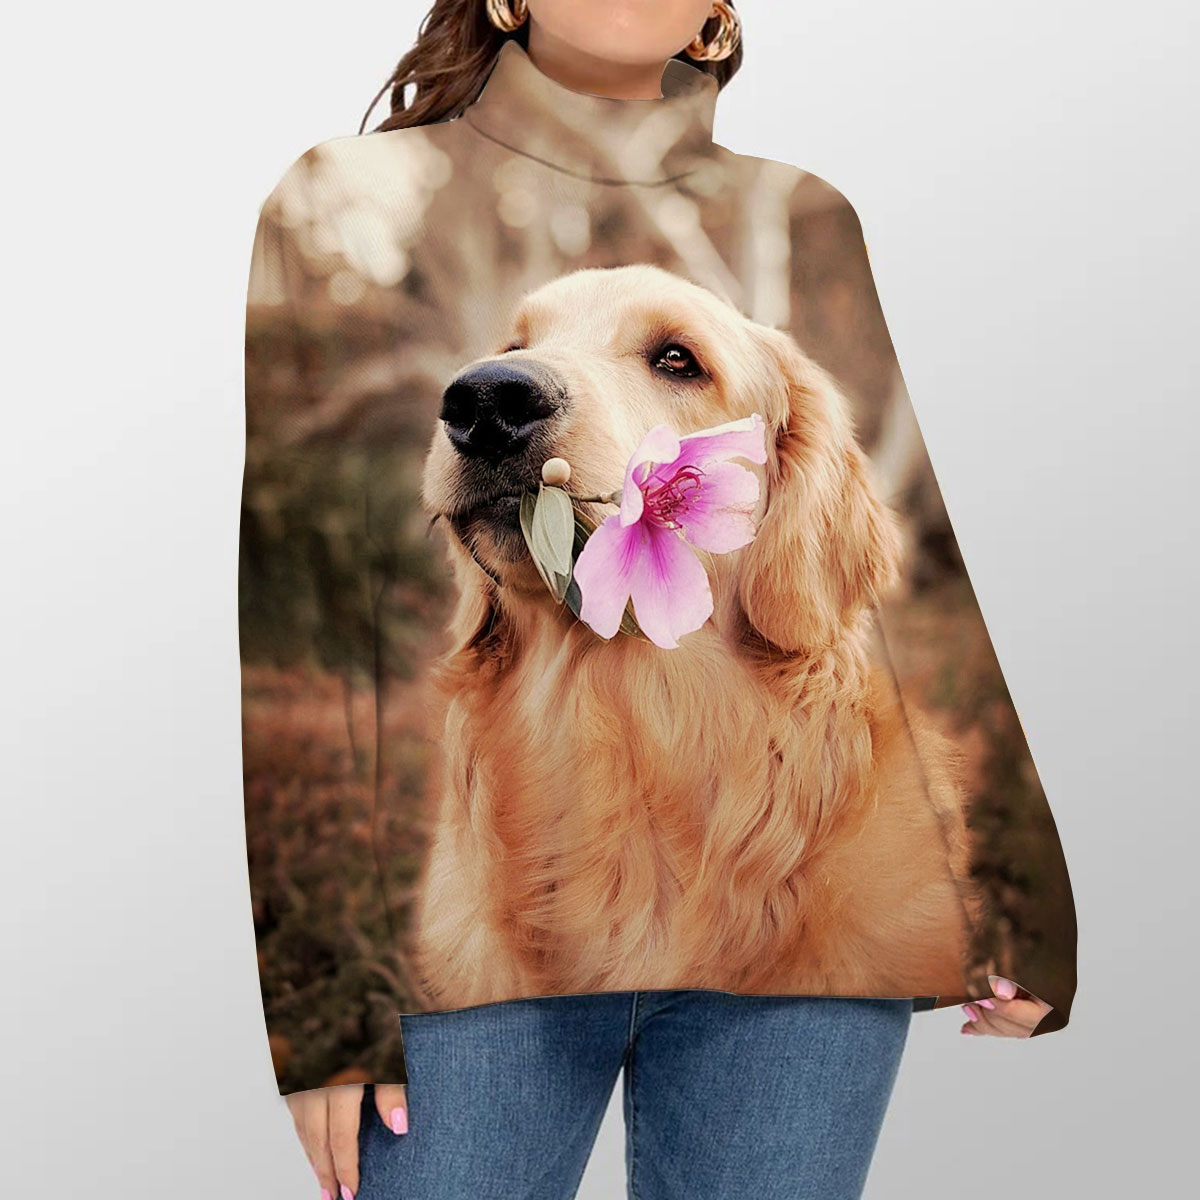 Dog Holding Flower Turtleneck Sweater_1_2.1